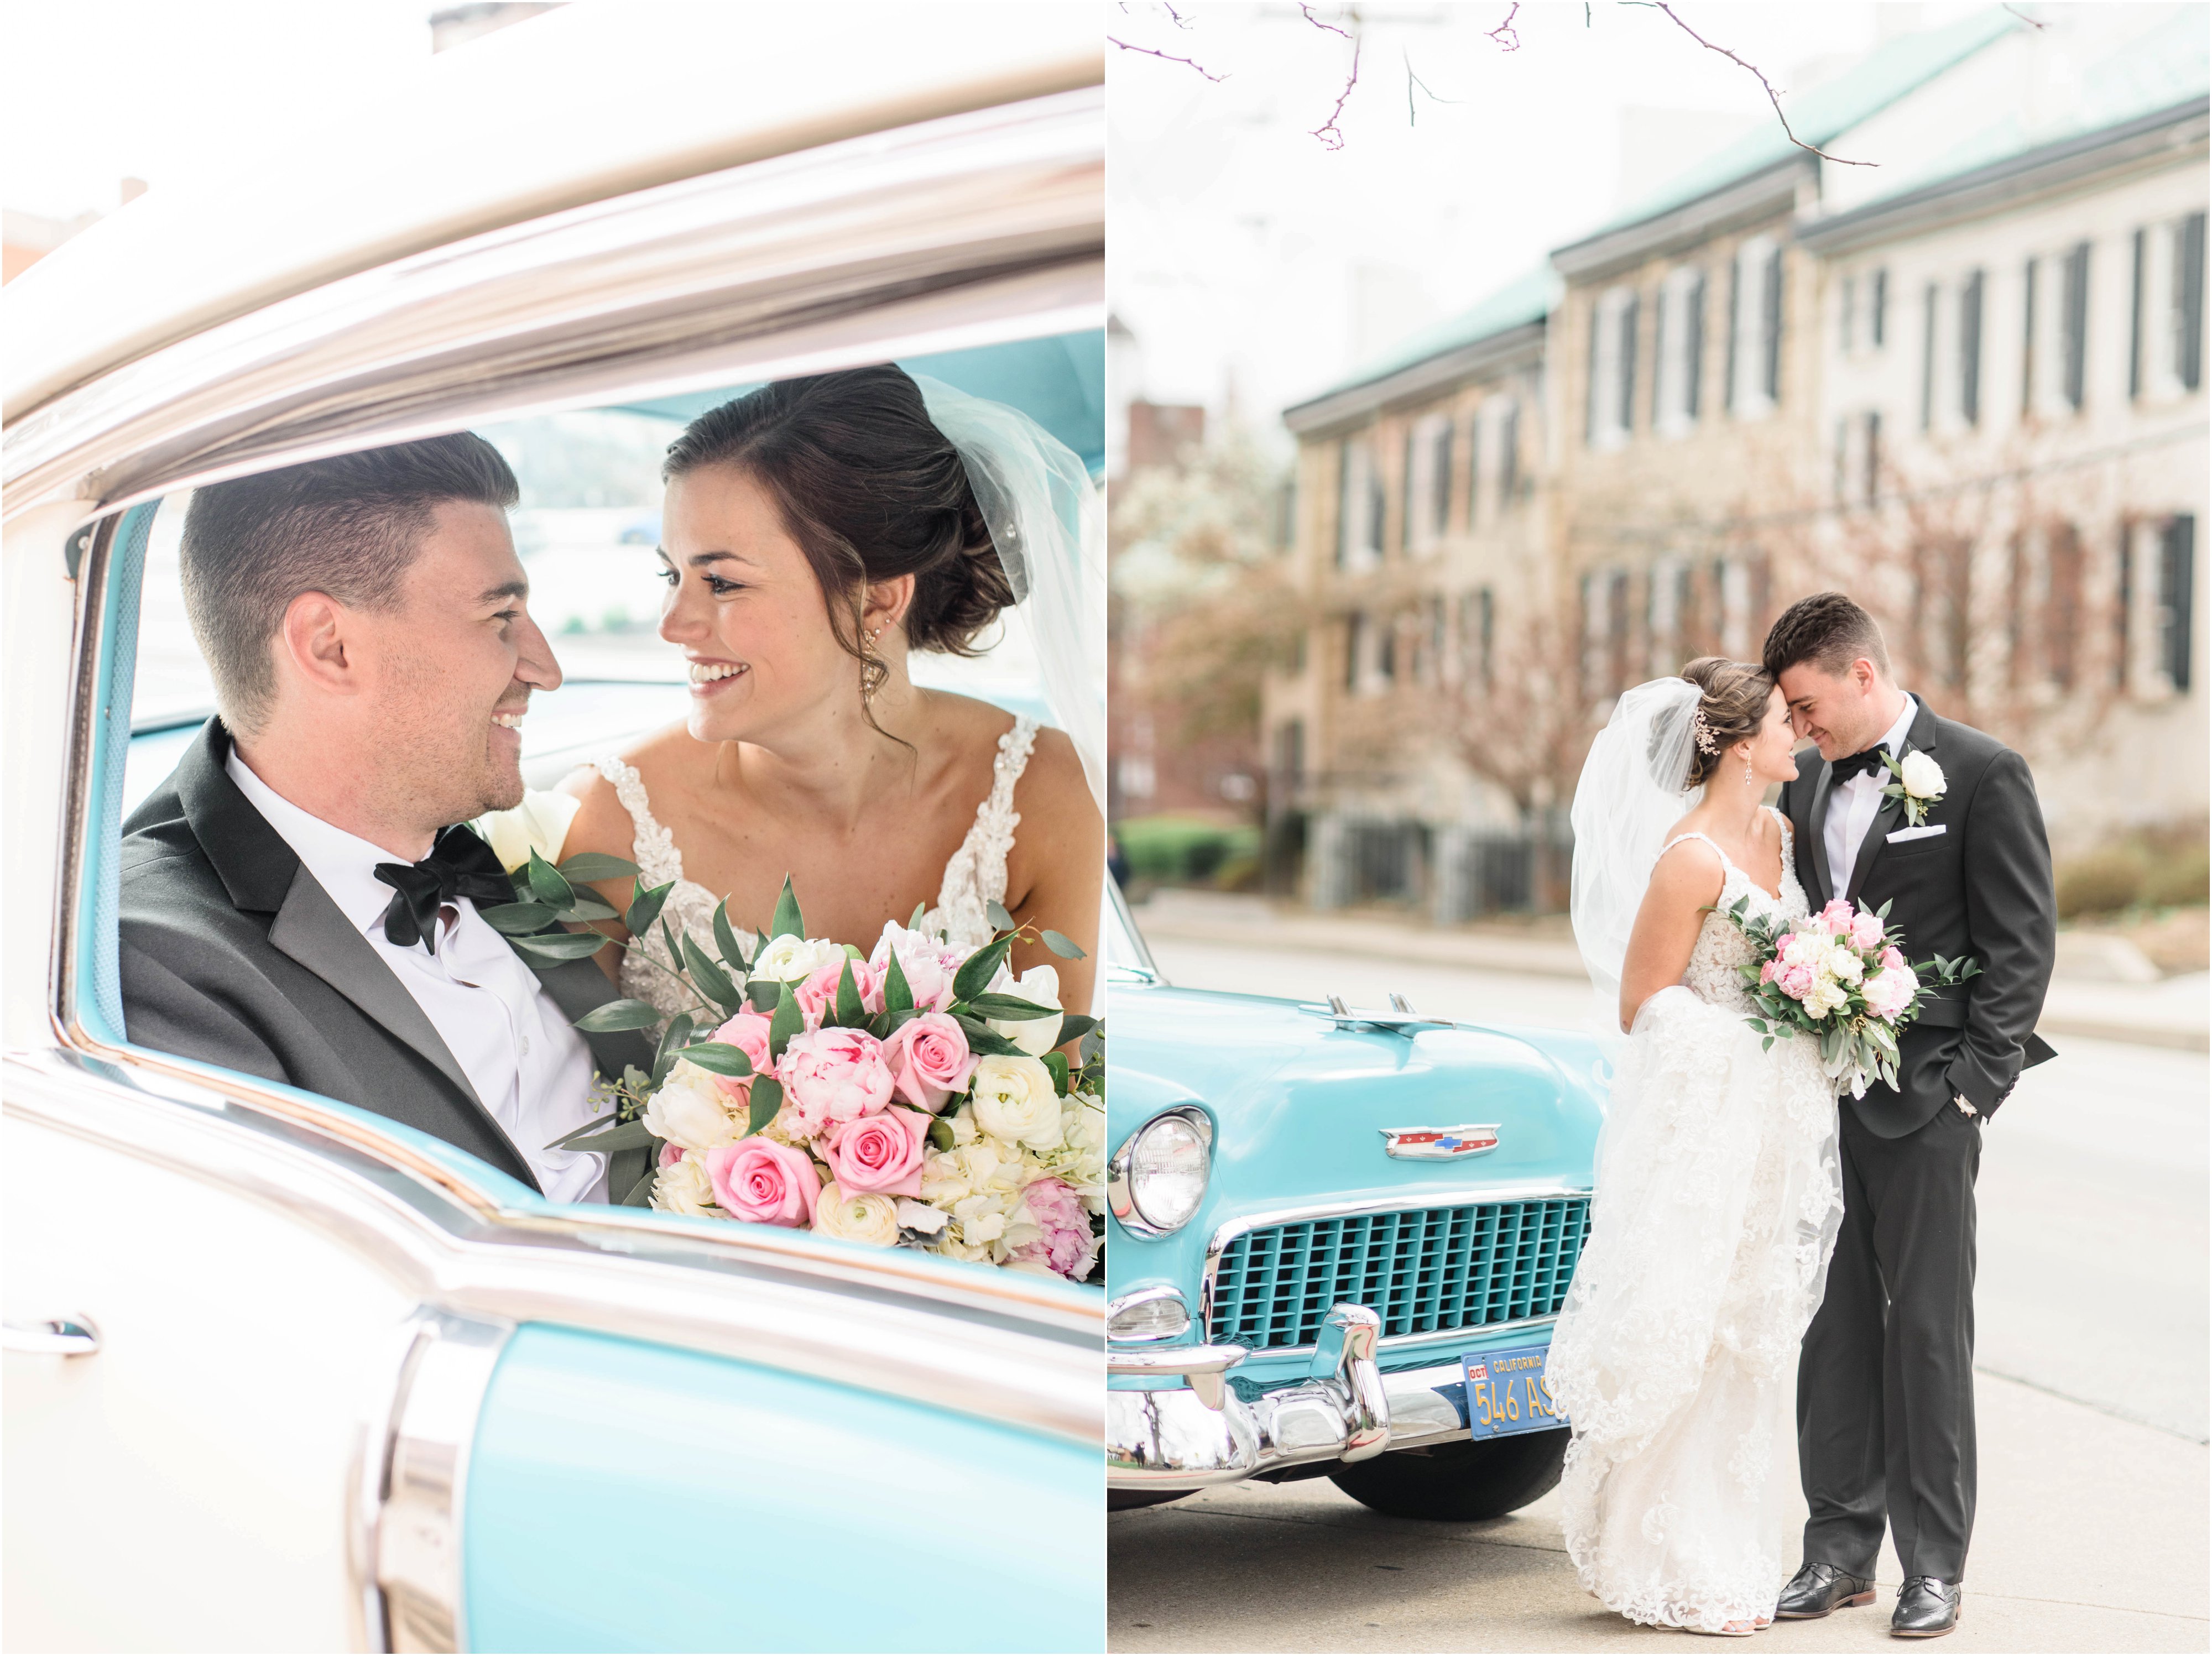 classic car wedding photos